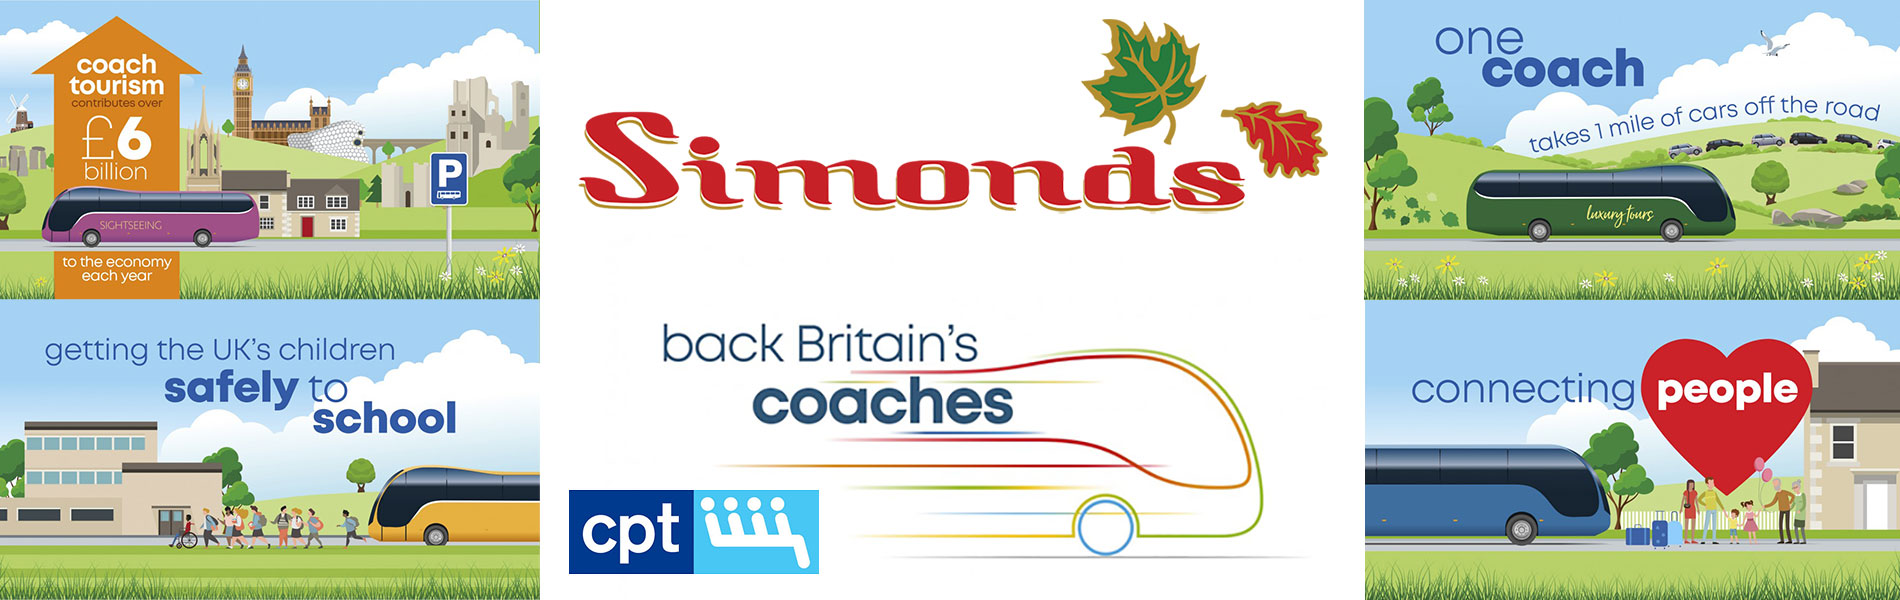 Back Britain's Coaches